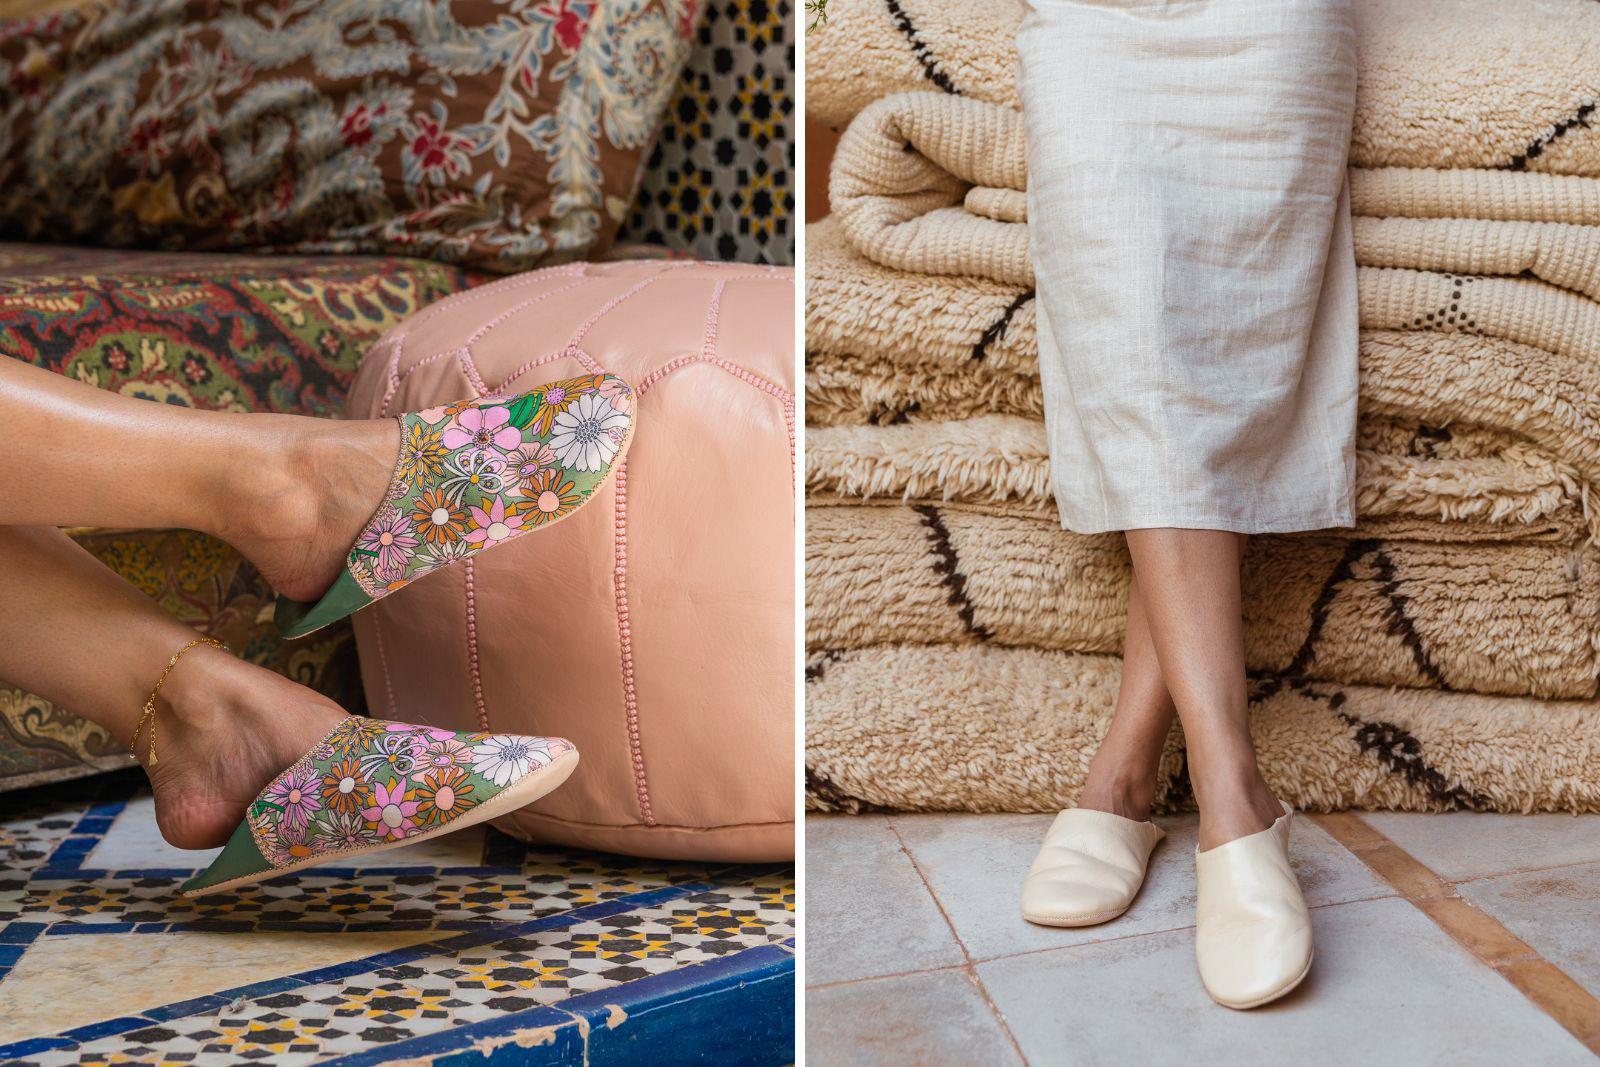 Eid fashion shoes photographs courtesy of Bohemia Design